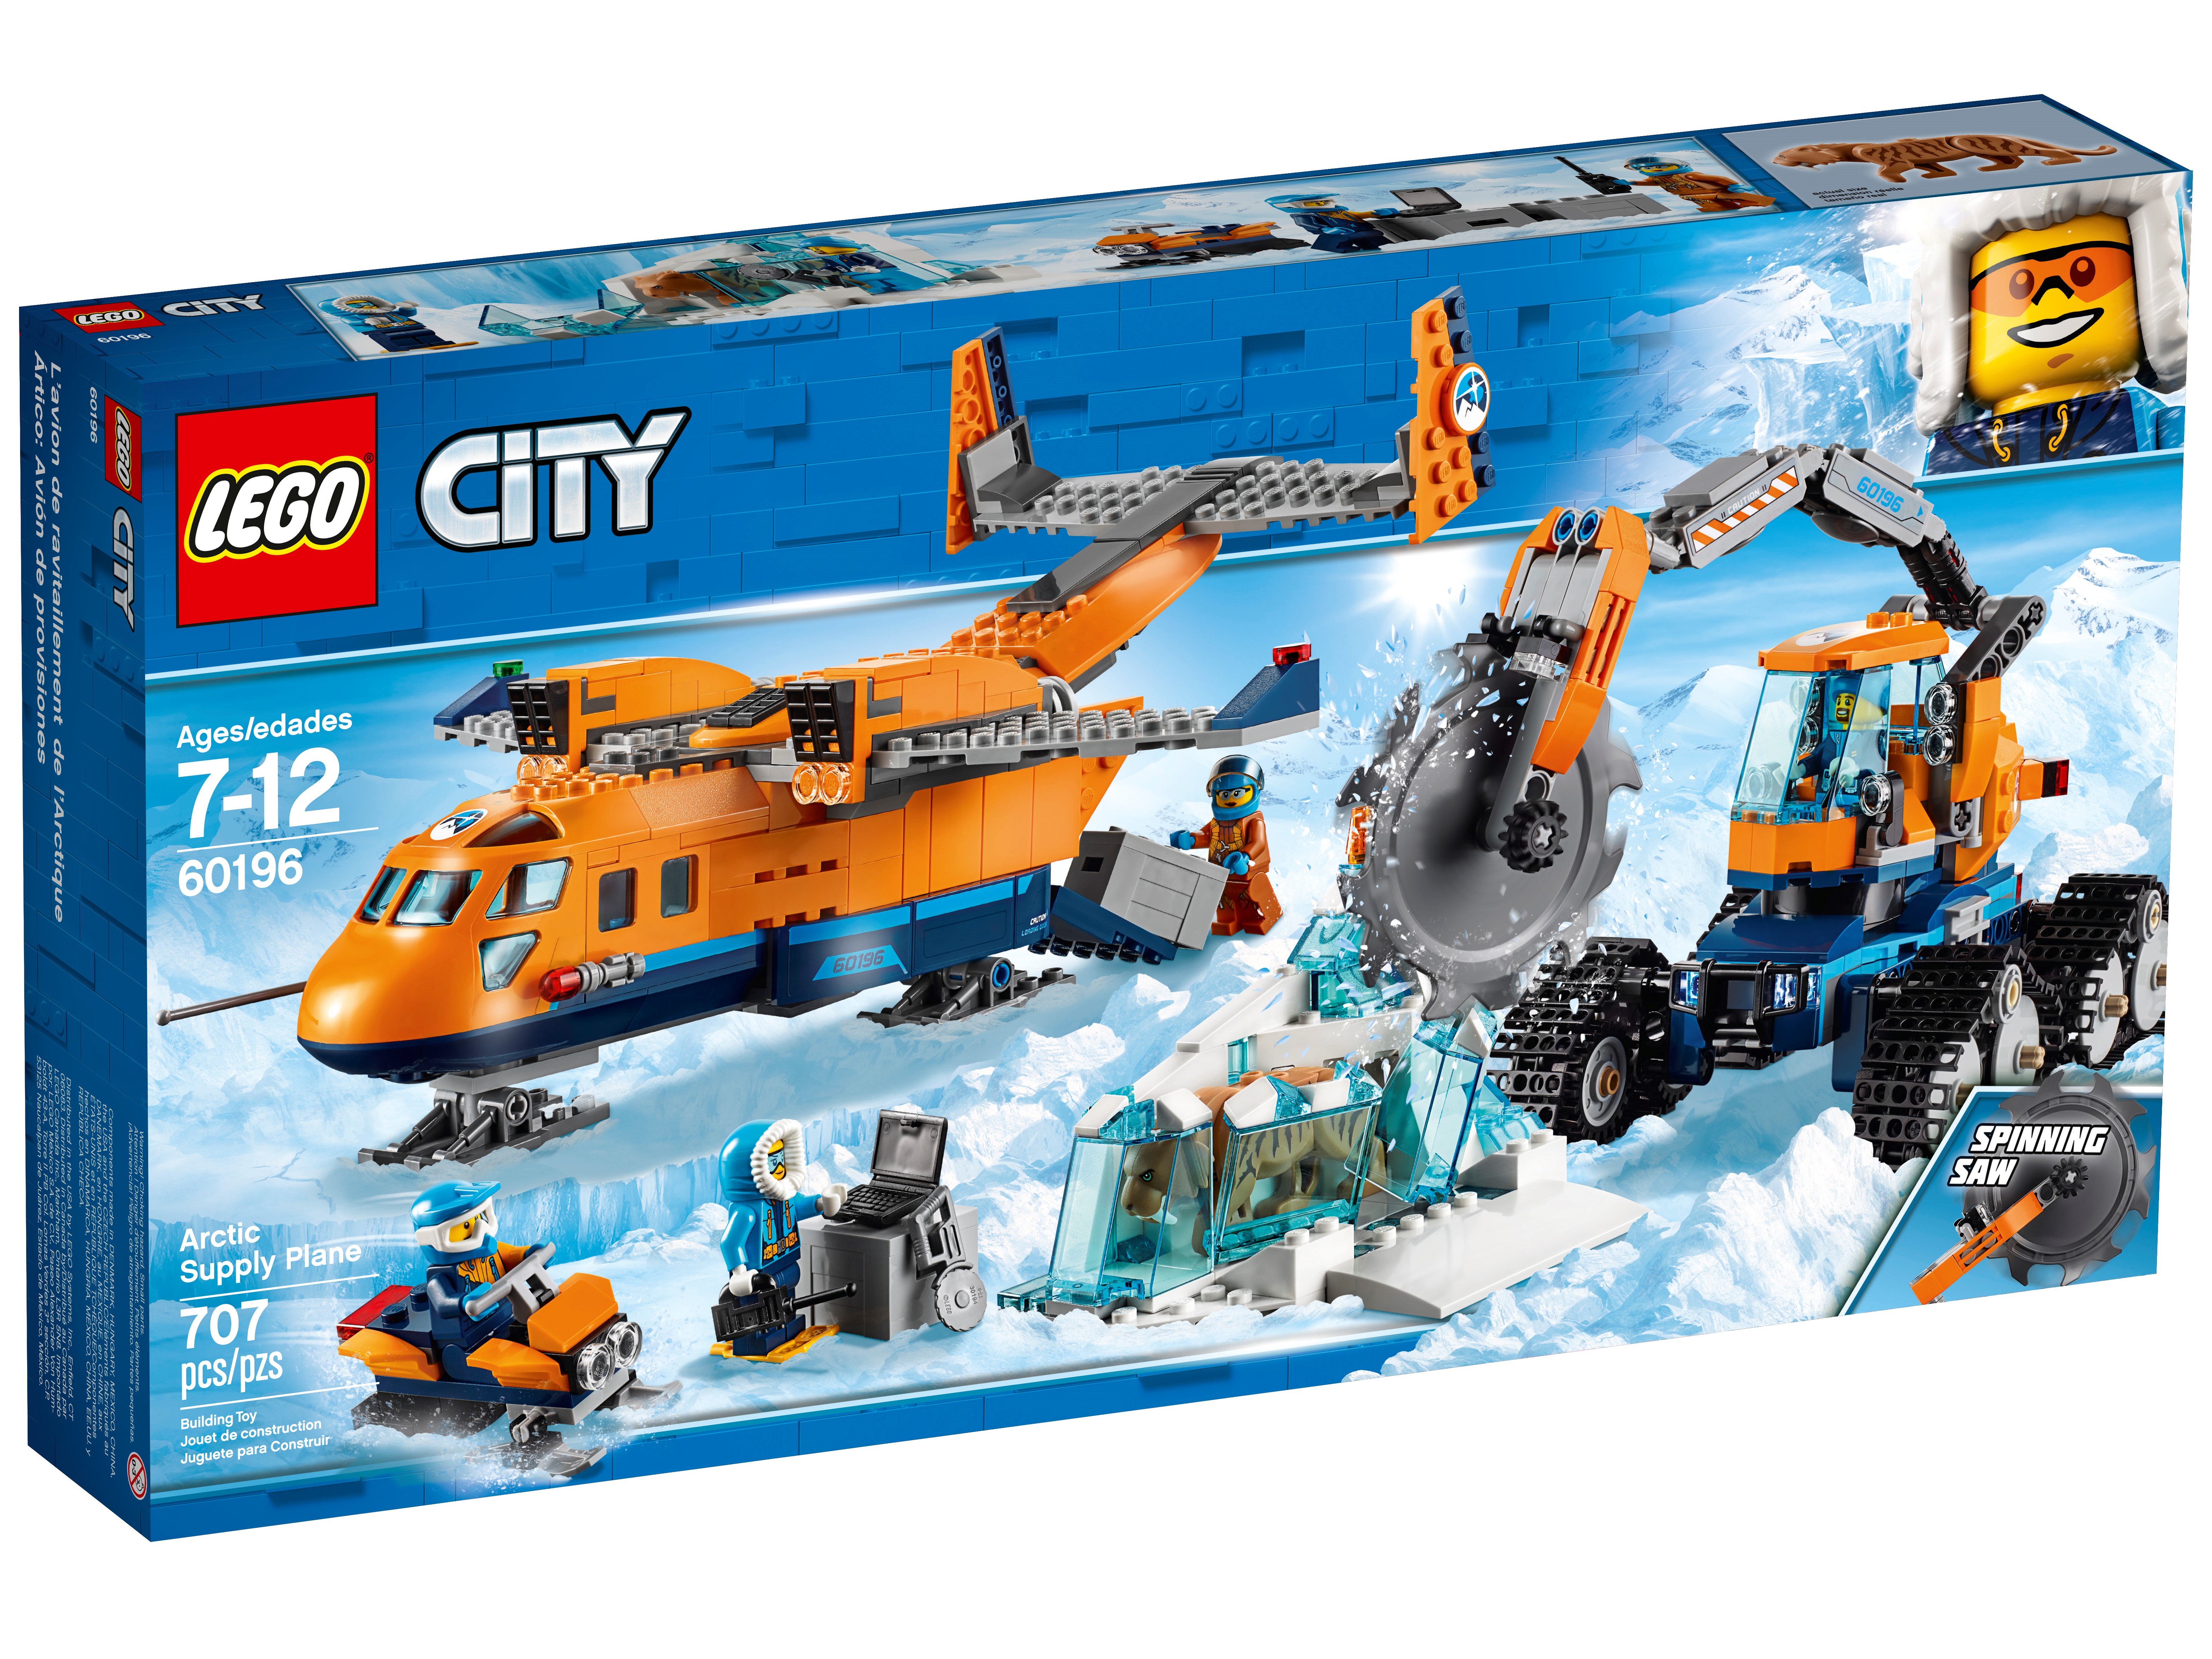 LEGO City Arctic Supply Plane 60196 Building Kit 707 Piece 